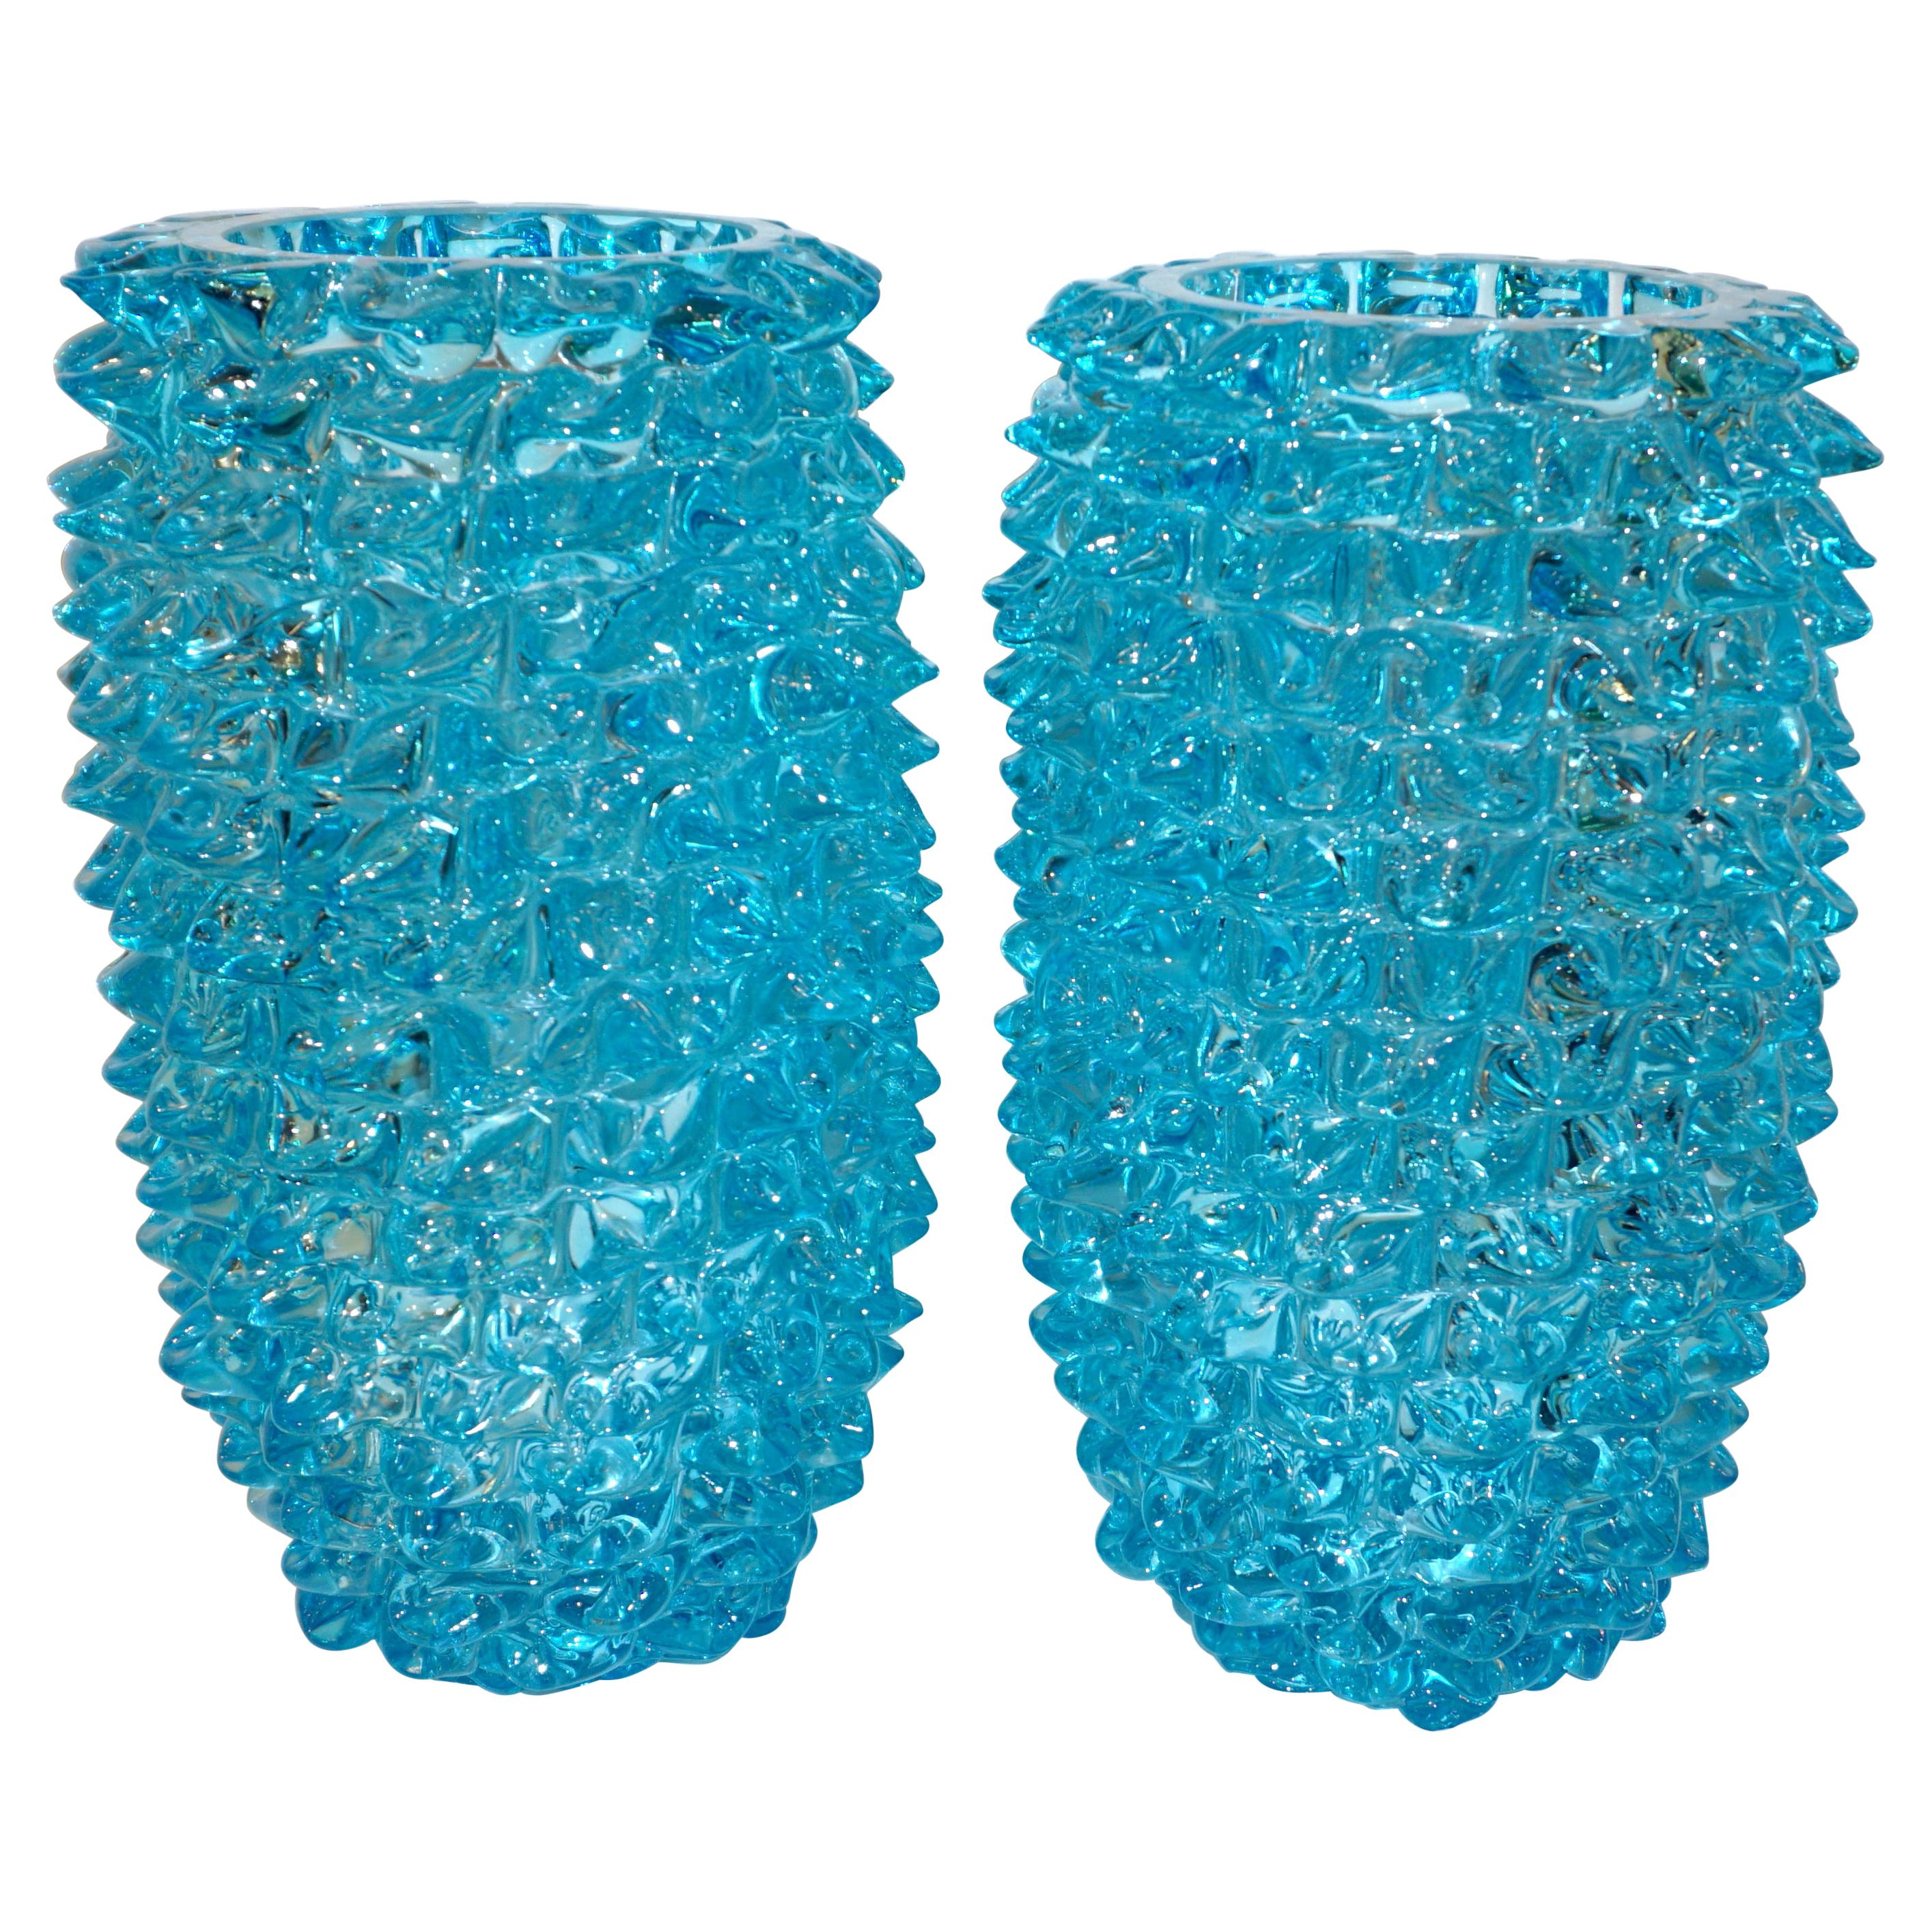 2000s Cenedese Italian Pair of Aquamarine Blue Rostrato Murano Glass Ovoid Vases